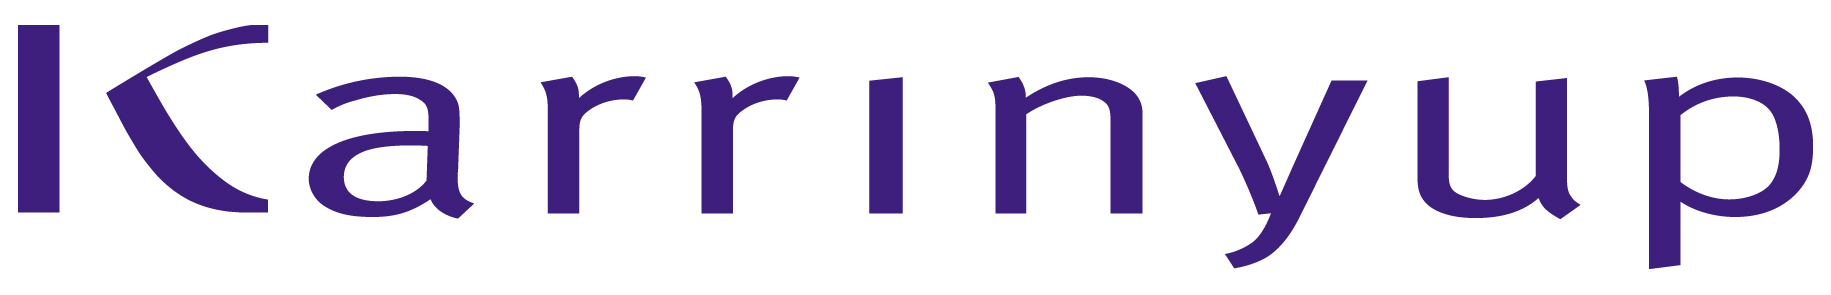 Karrinyup logo